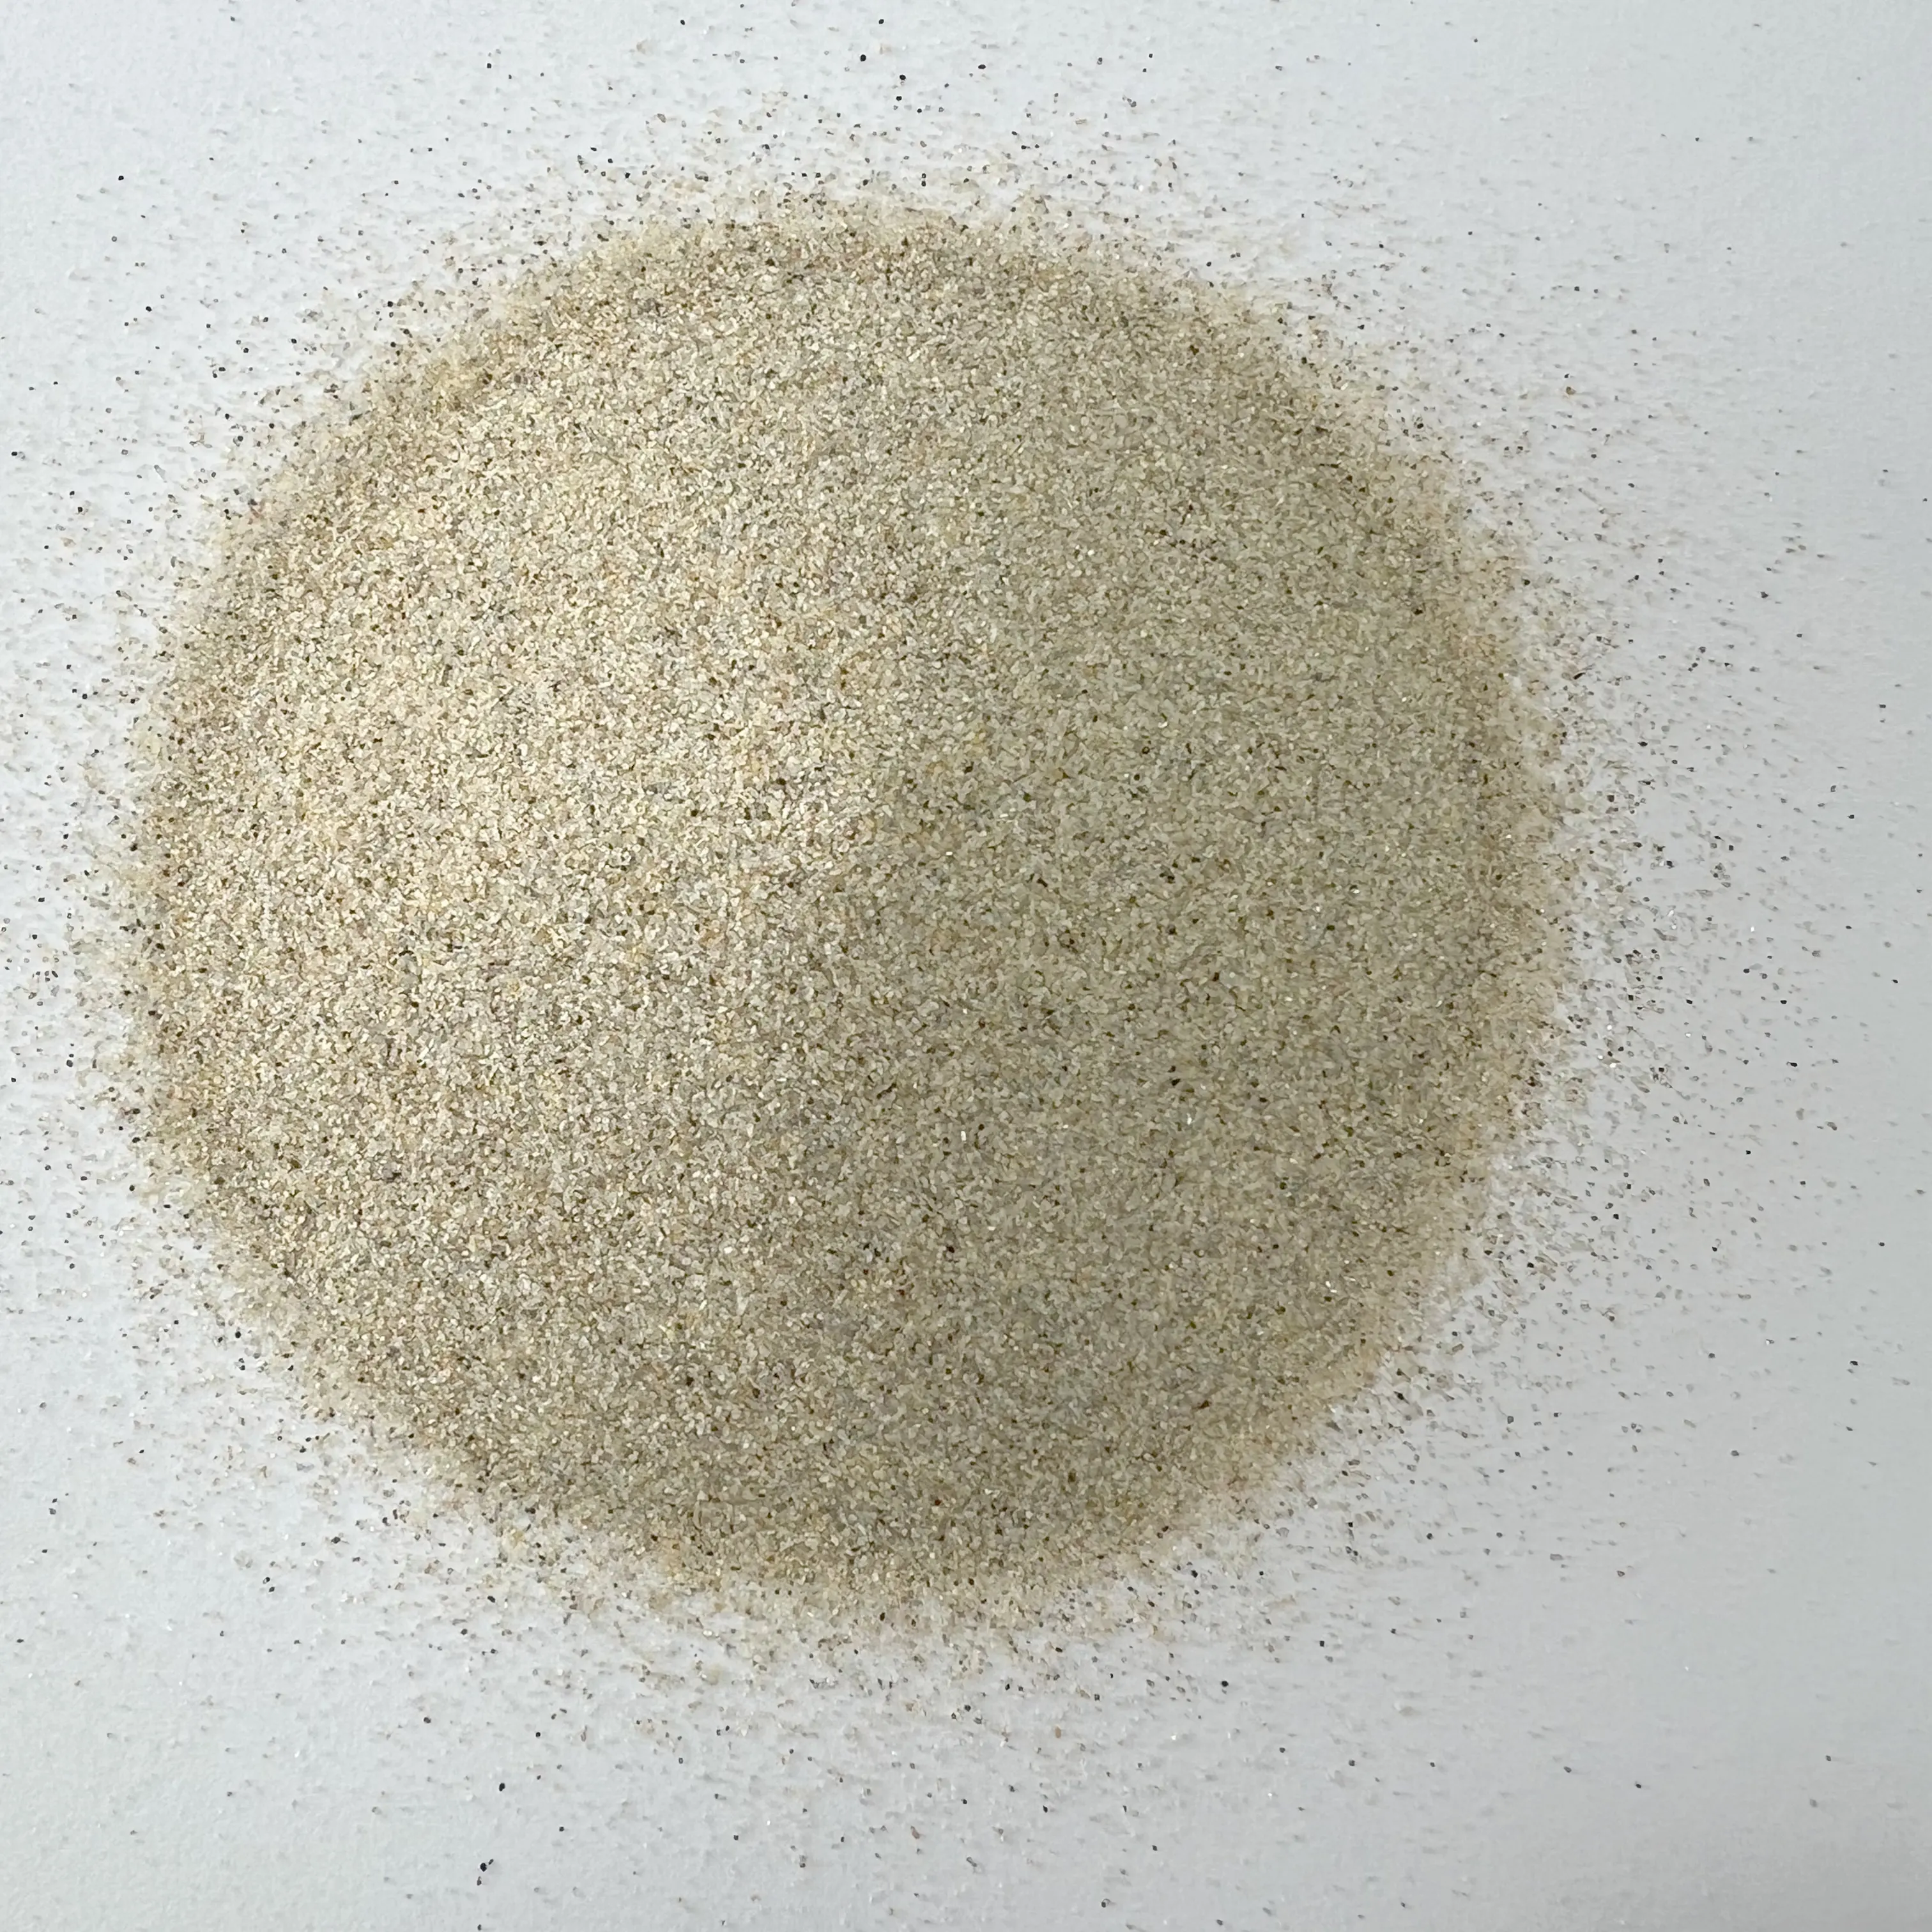 free sample provide high grade 58% kyanite sand origin Australia